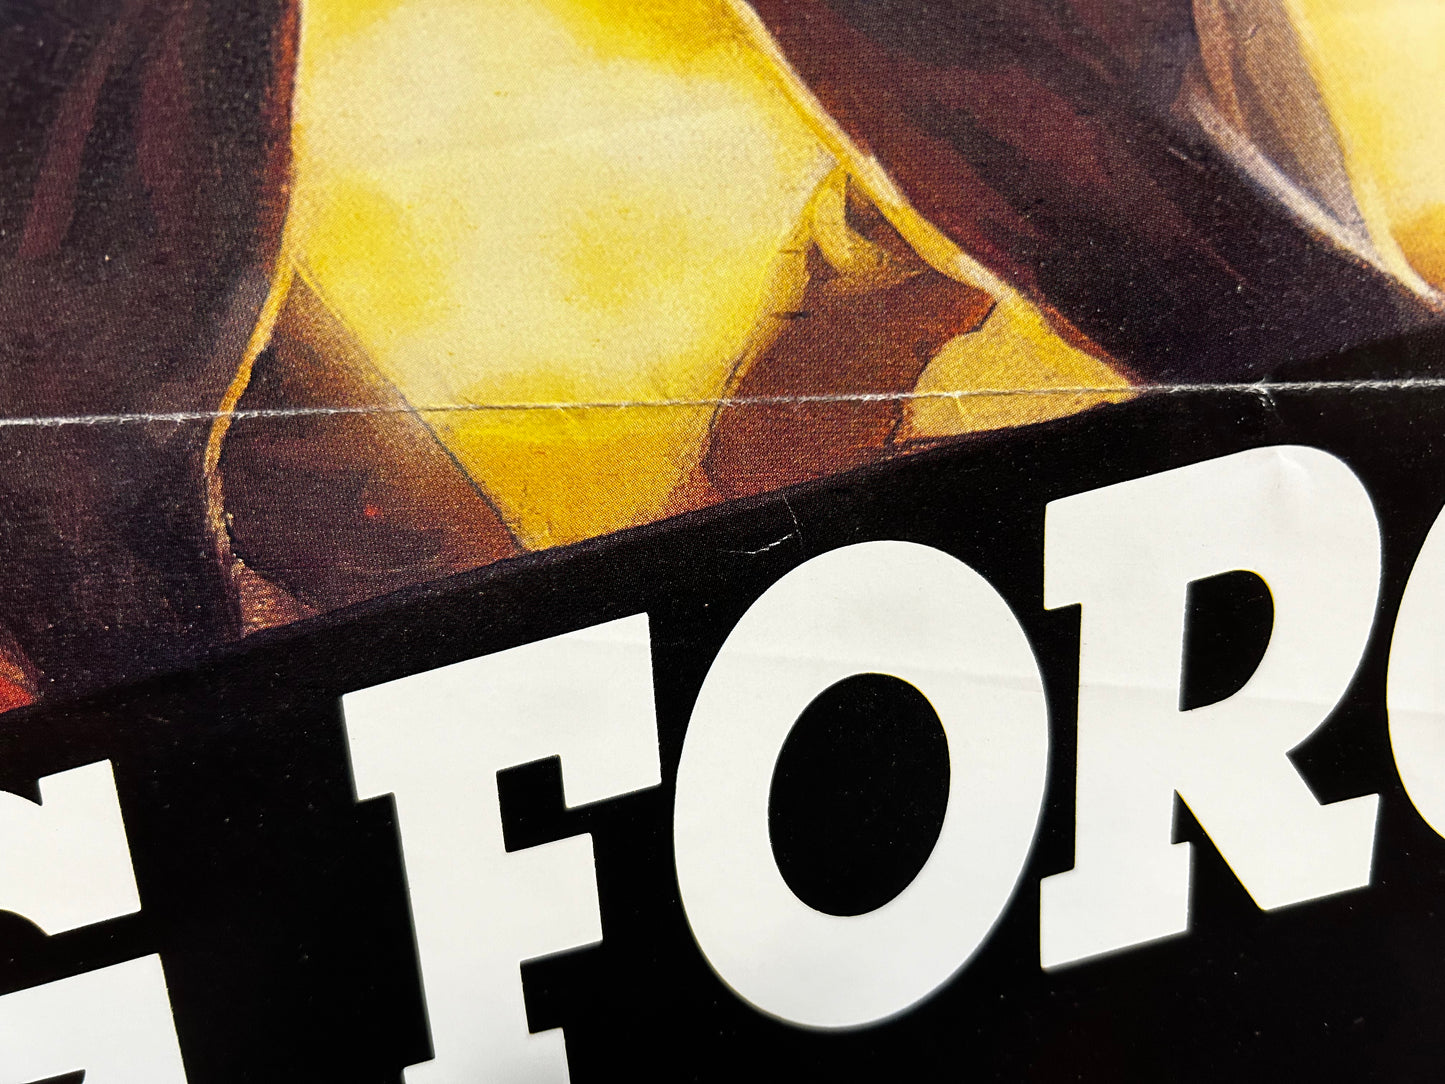 Avenging Force Original One Sheet Poster 1986